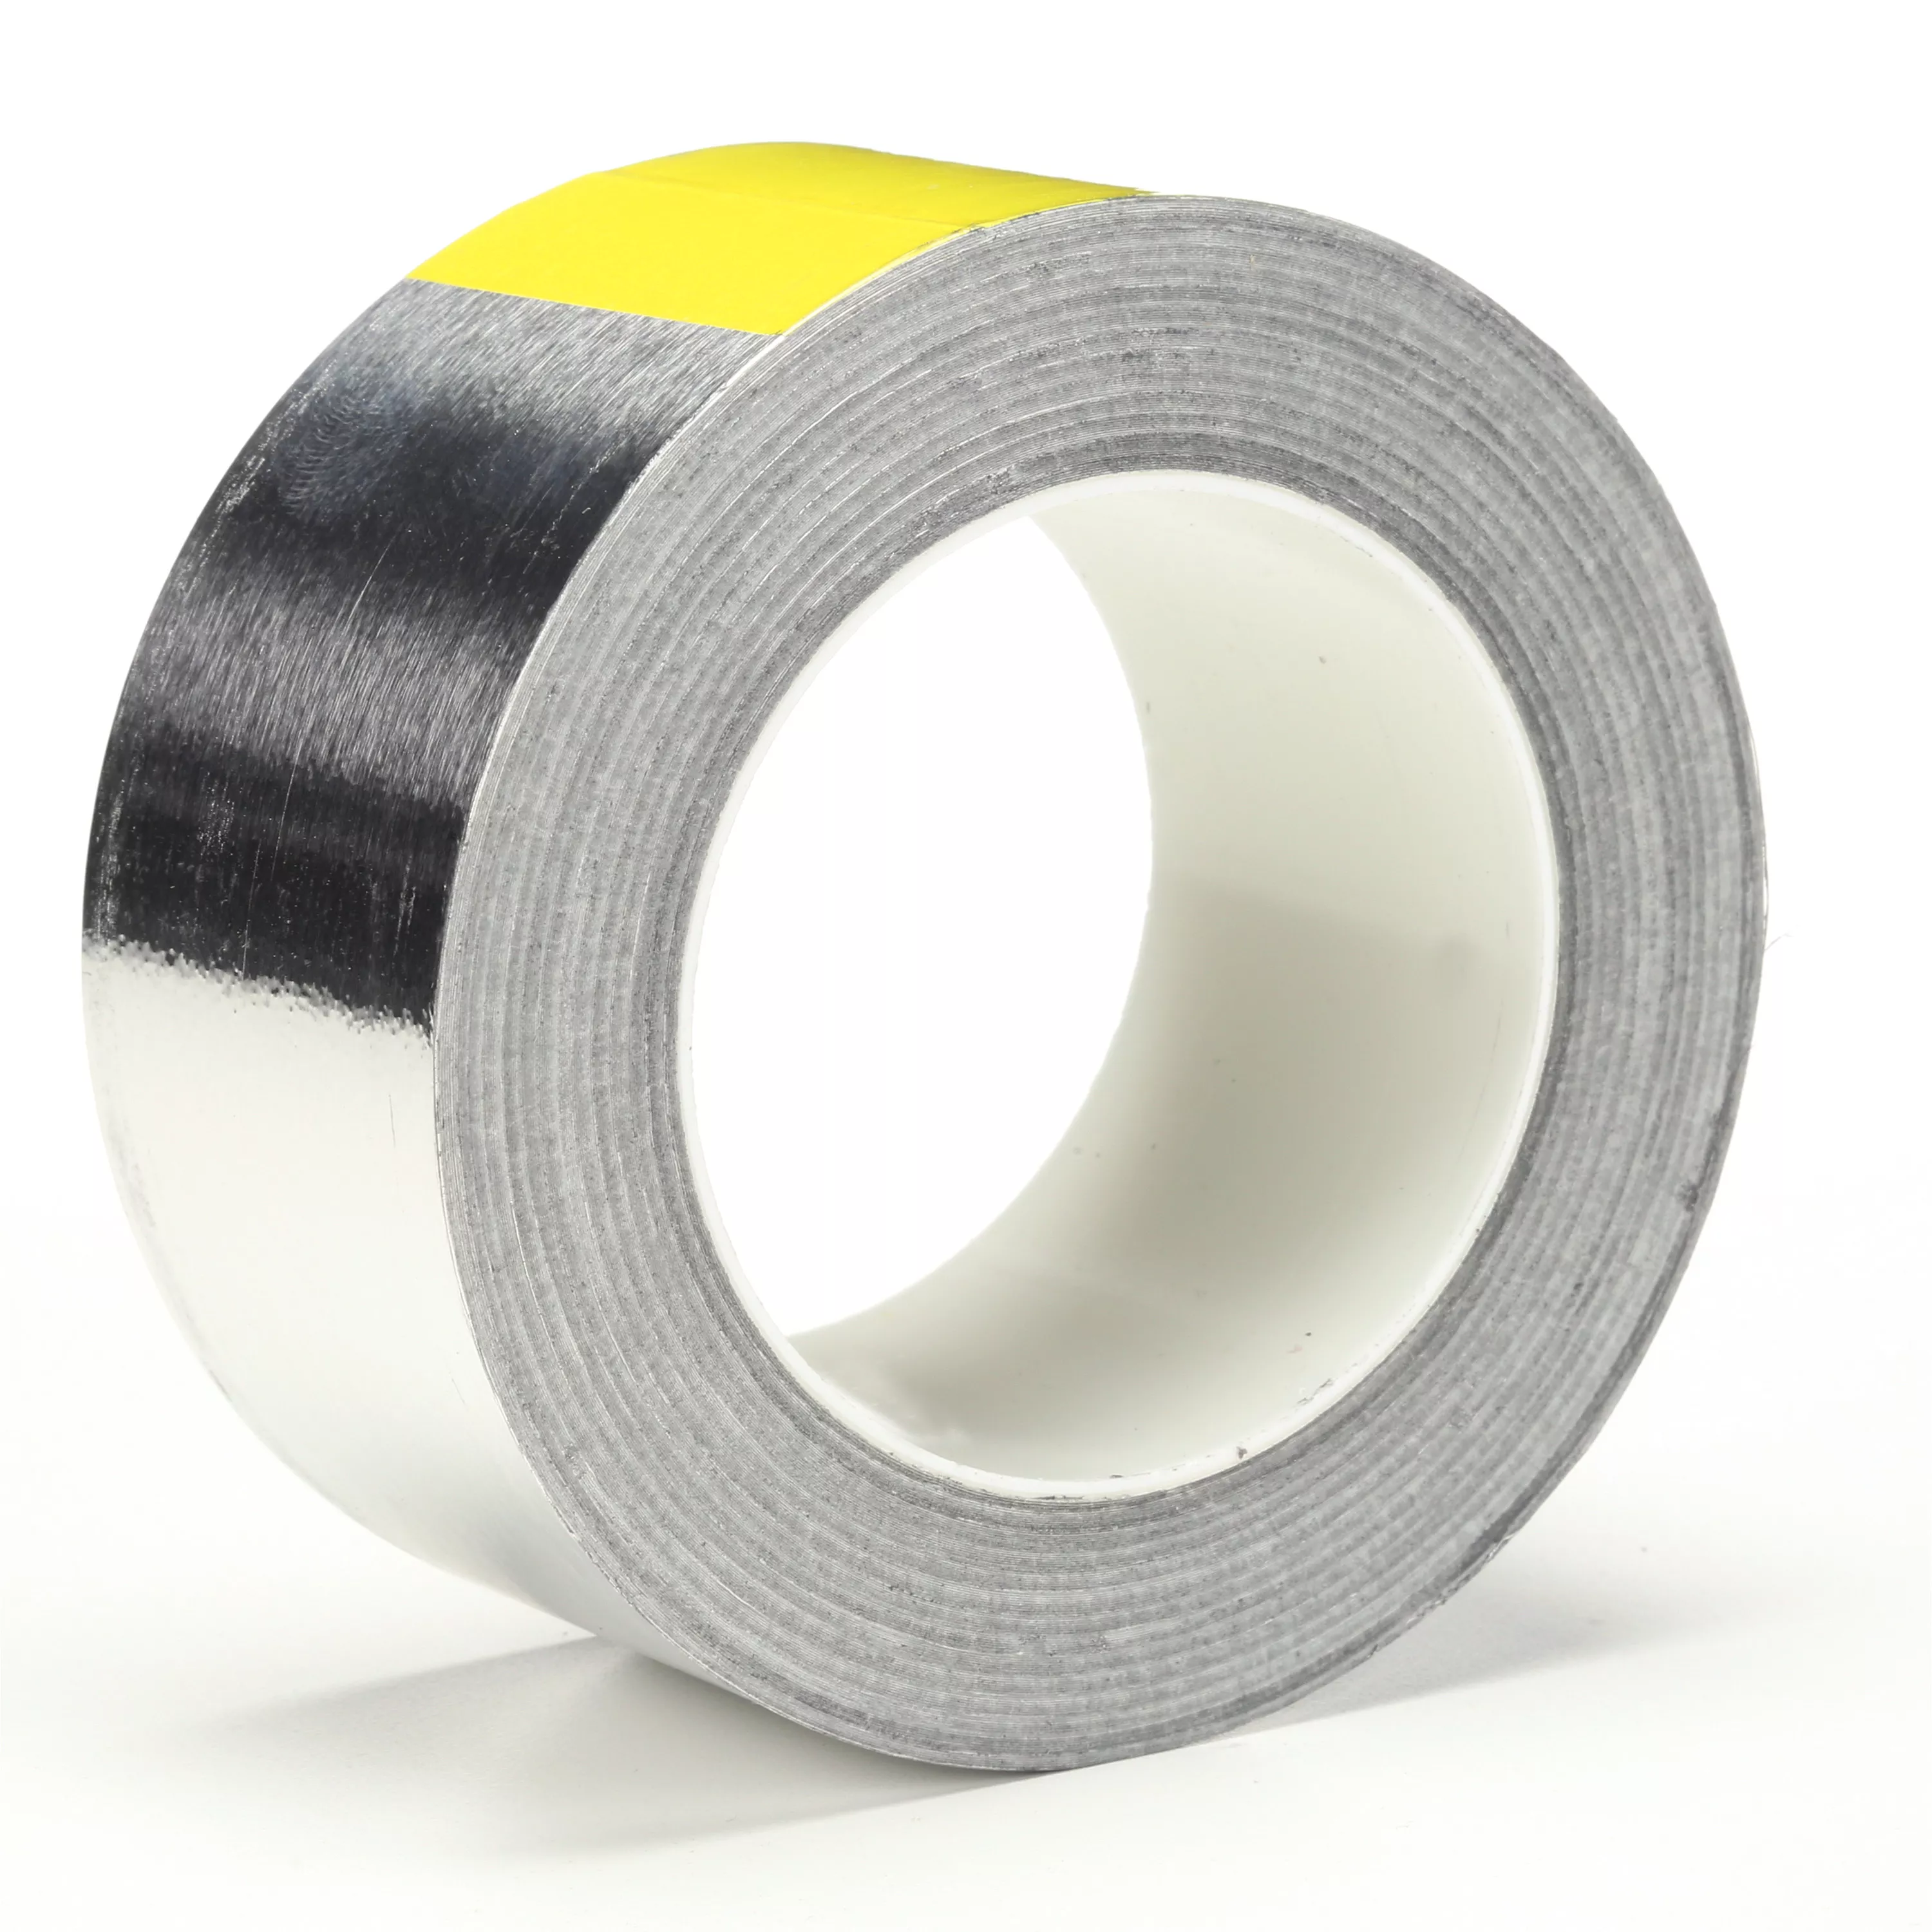 3M™ Conductive Aluminum Foil Tape 3302, Silver, 2 in x 36 yd, 3.5 mil,
24 Rolls/Case